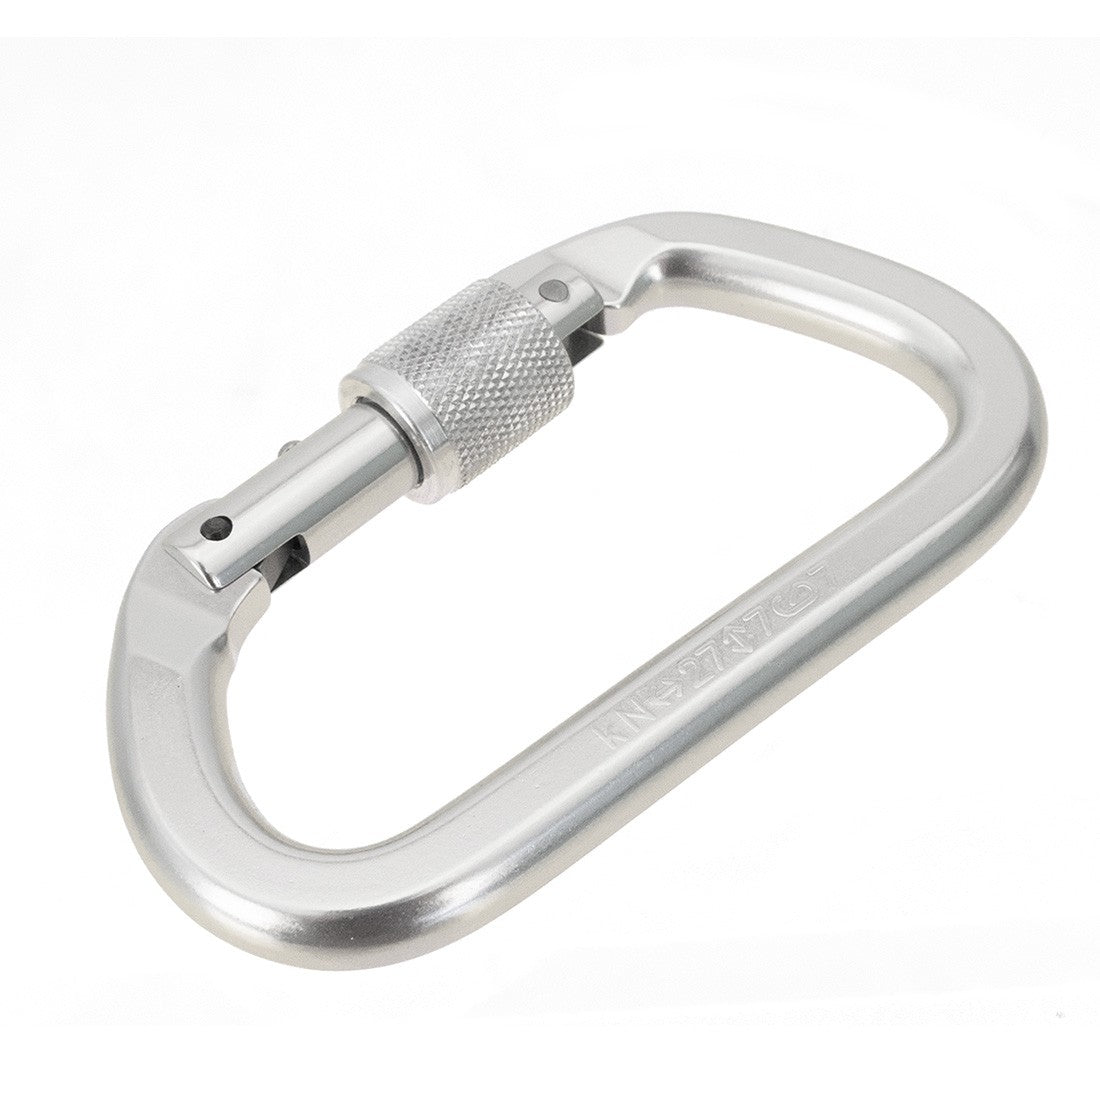 SMC Locking Aluminum D-Shape Carabiner Top View